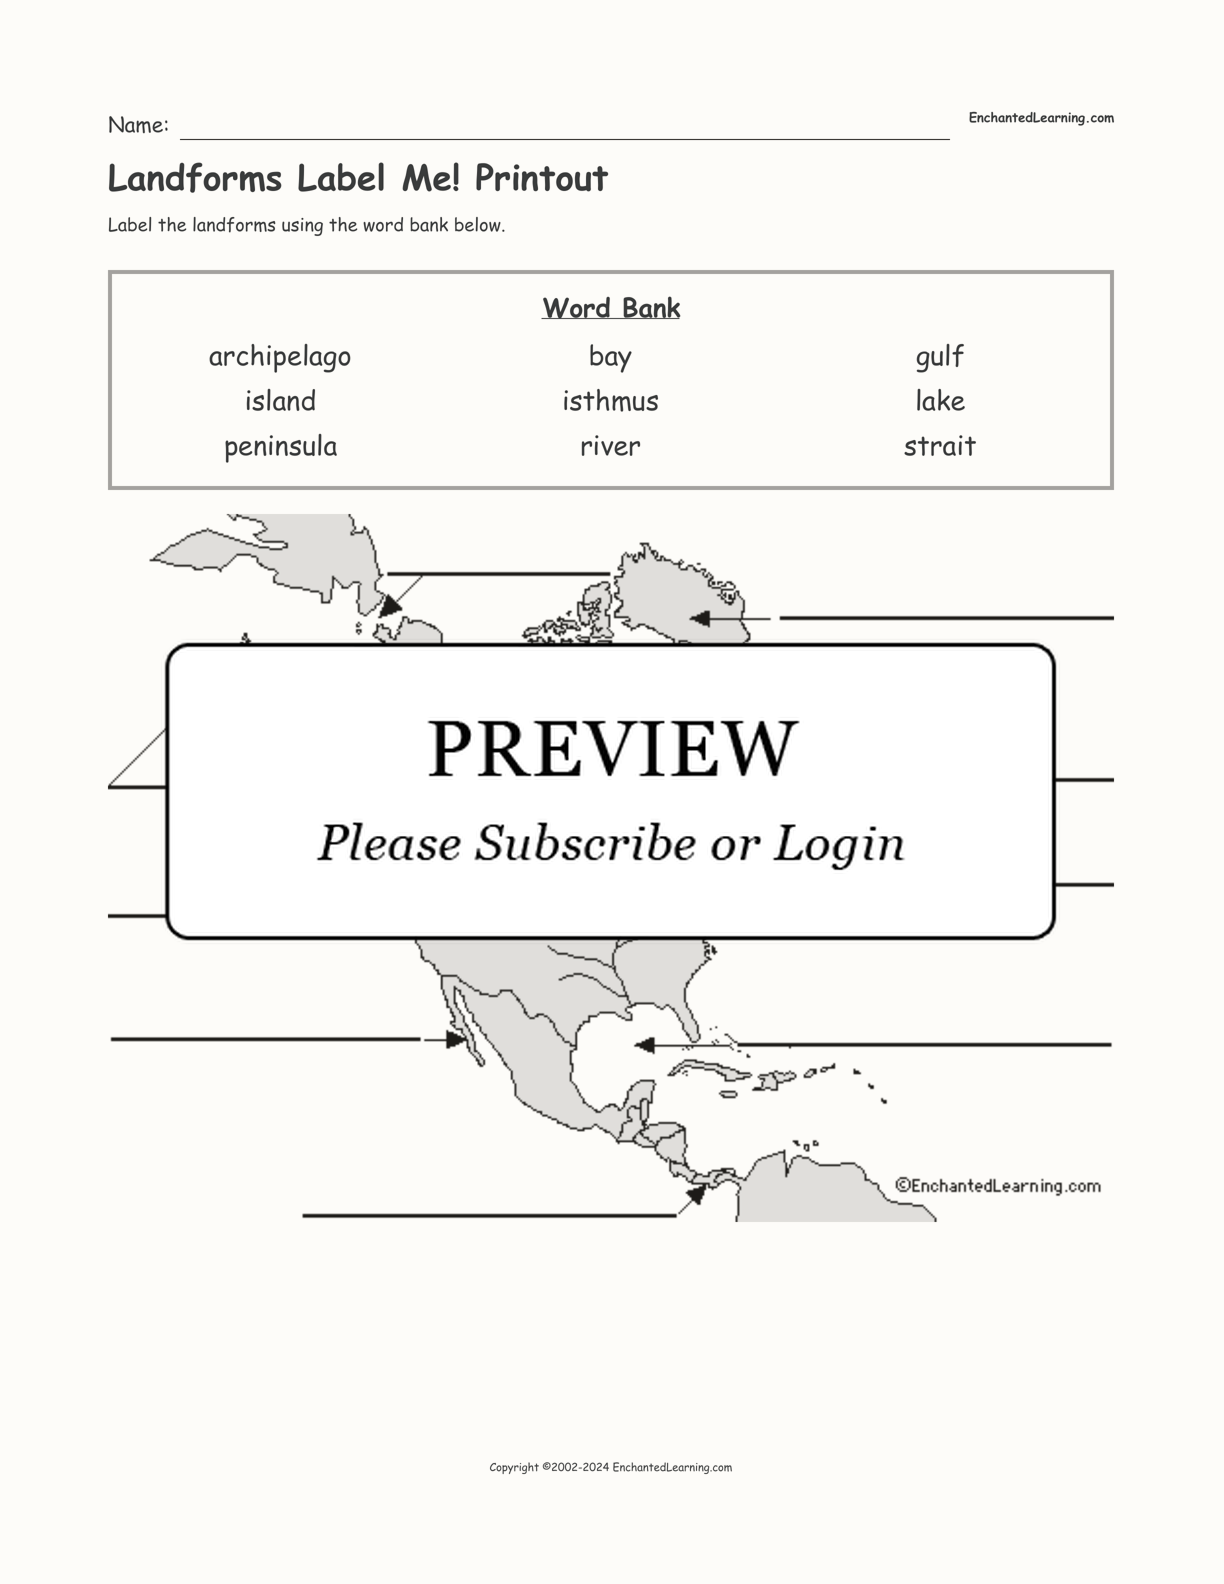 Landforms Label Me! Printout interactive worksheet page 1